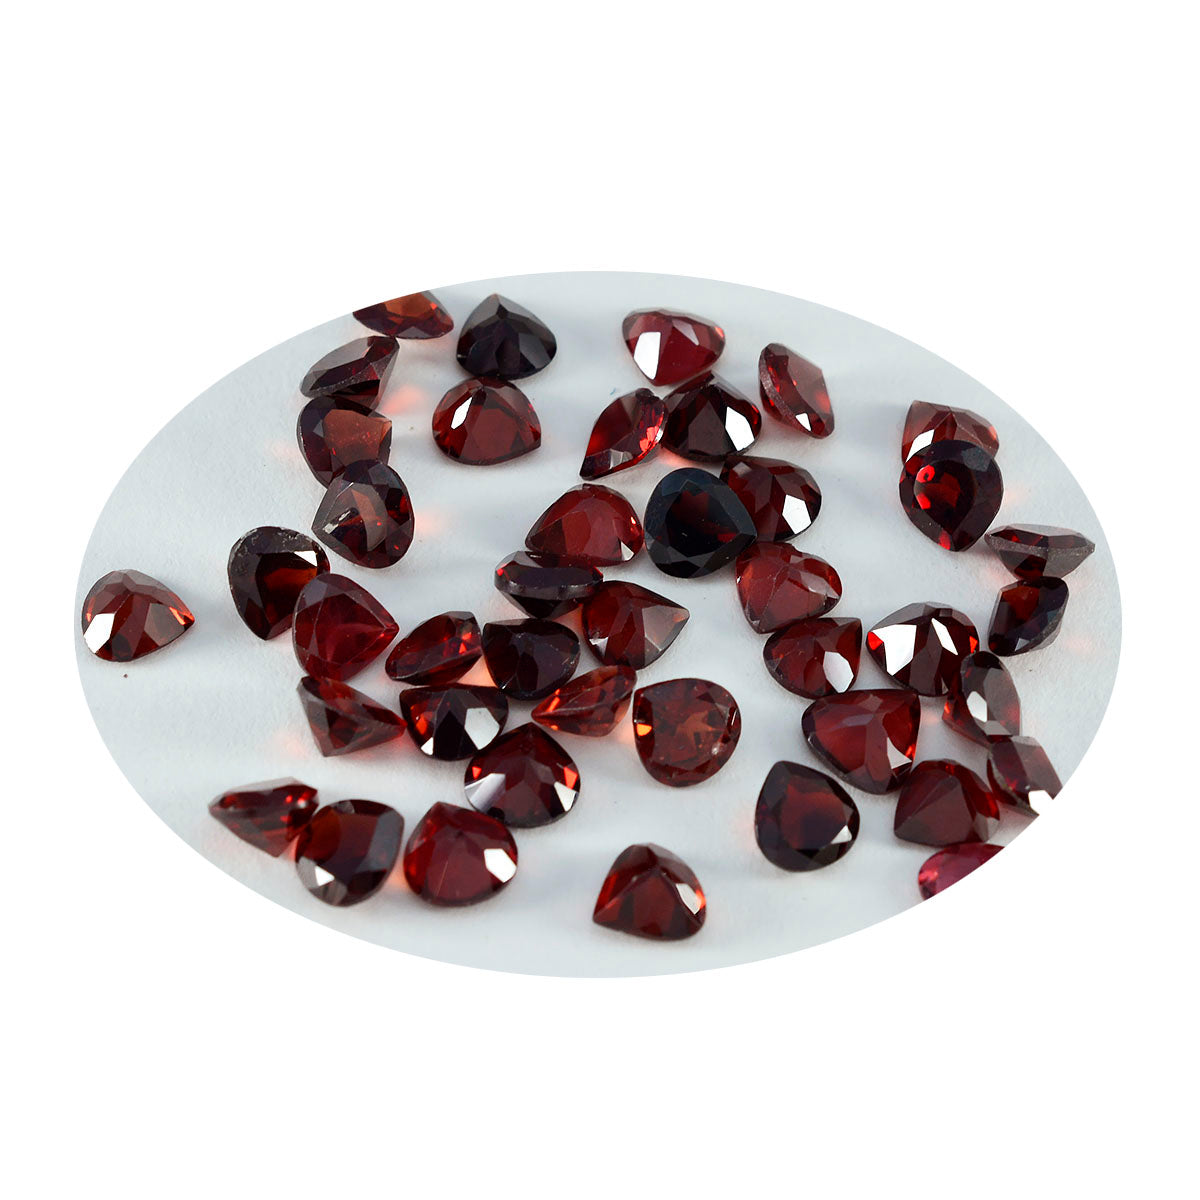 Riyogems 1PC Genuine Red Garnet Faceted 6x6 mm Heart Shape pretty Quality Loose Stone